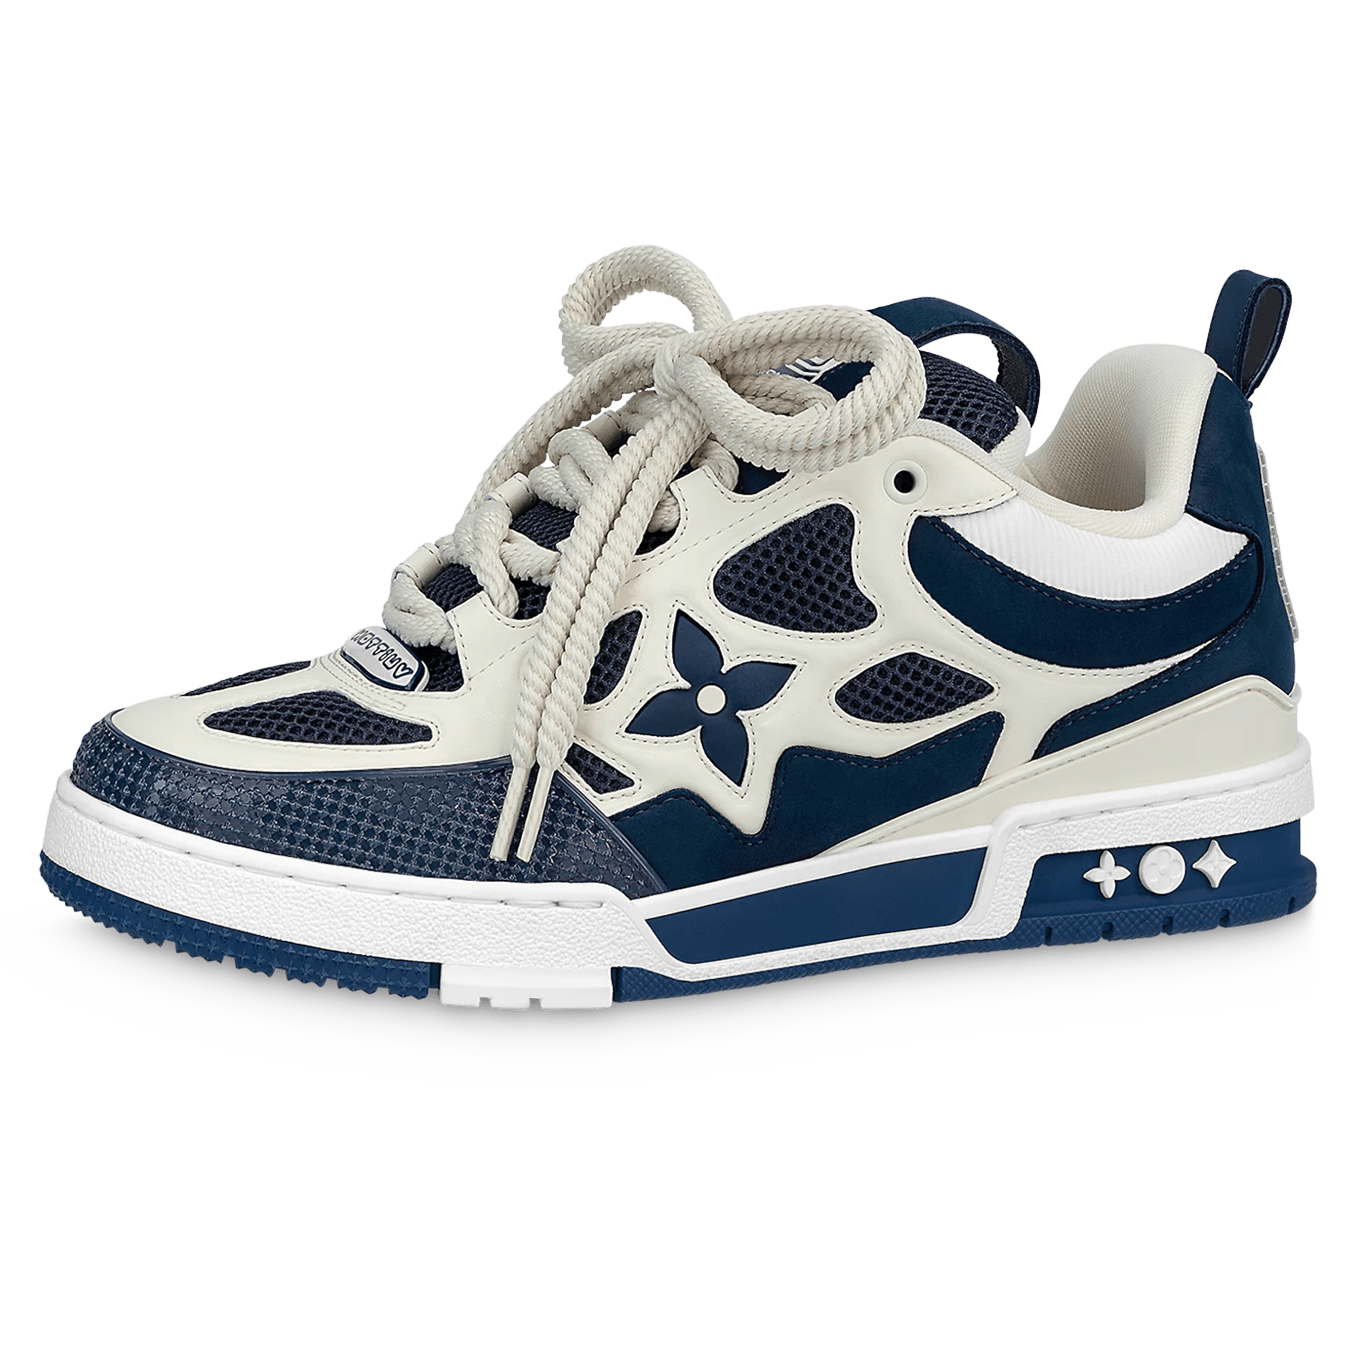 Louis Vuitton LV Skate Sneaker, Navy, 10.5